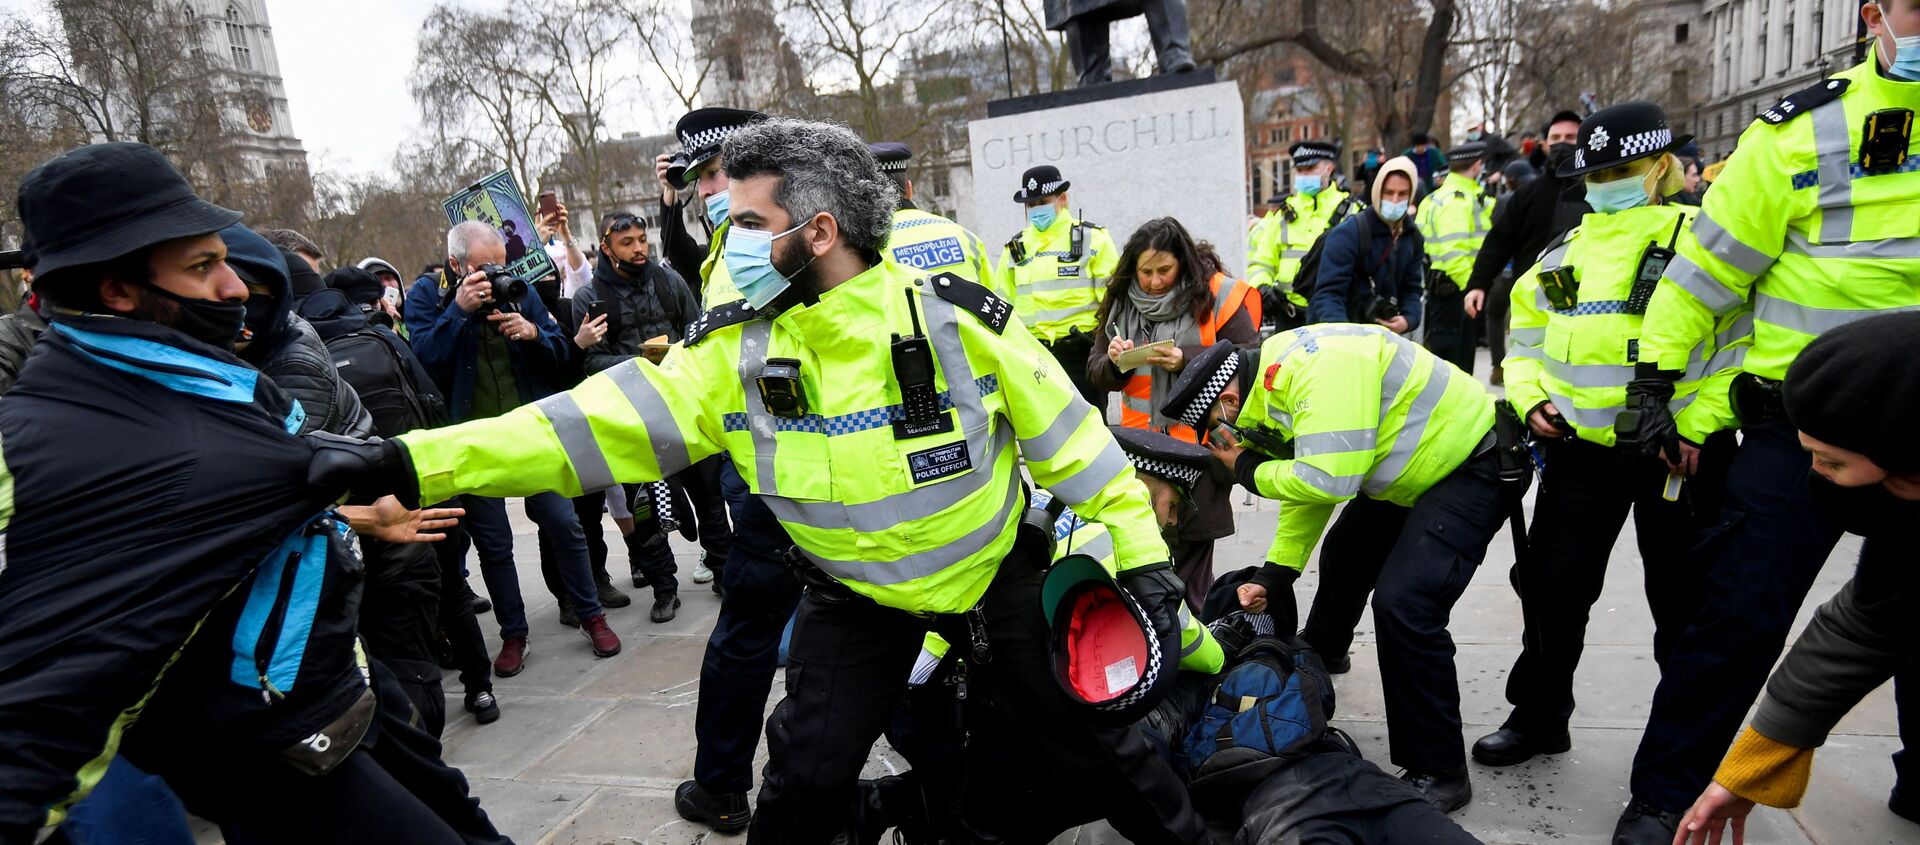 Police officers restrain demonstrators during a protest in London, Britain, April 3, 2021. REUTERS/Toby Melville  - Sputnik International, 1920, 24.04.2021